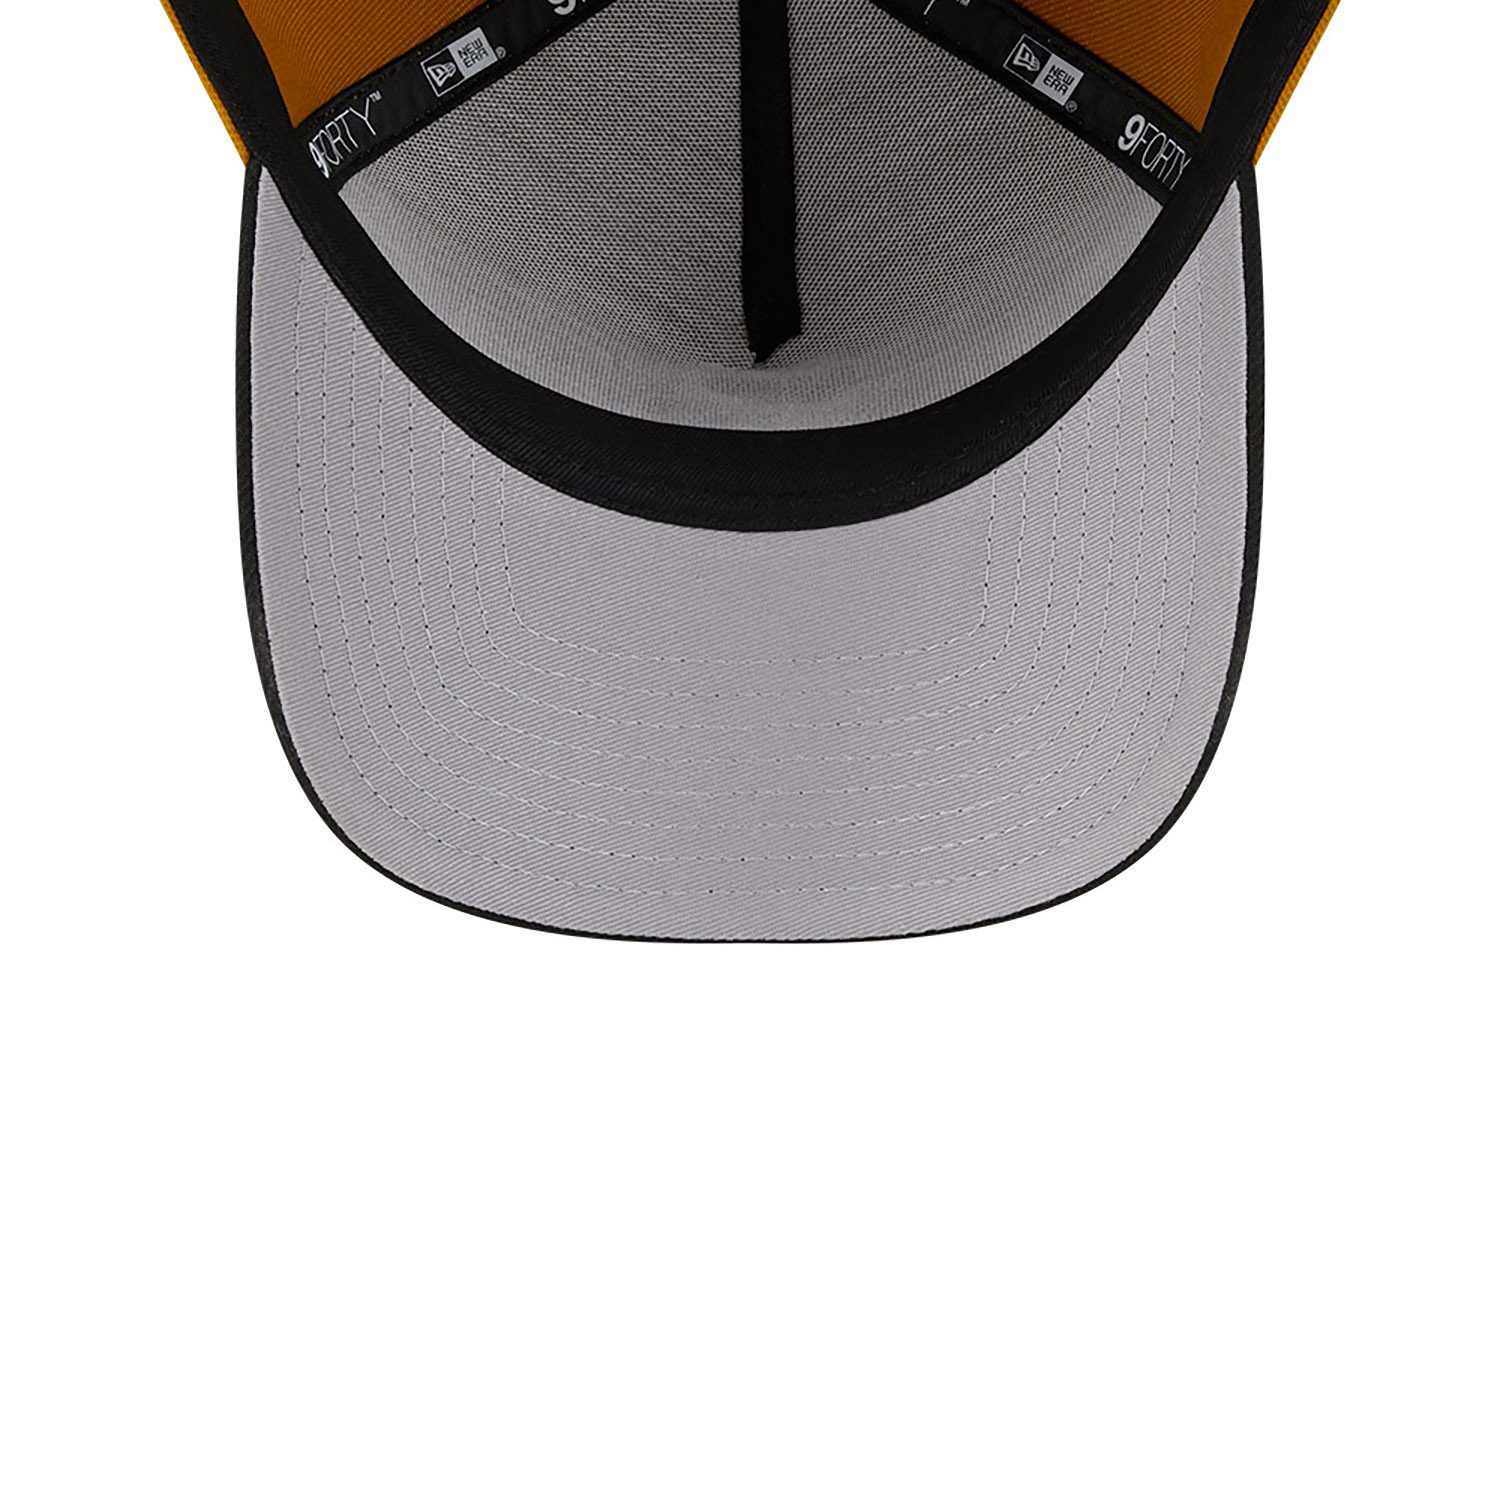 Braves 21 World Series New Era 59FIFTY Pinstripe & Navy Hat Grey